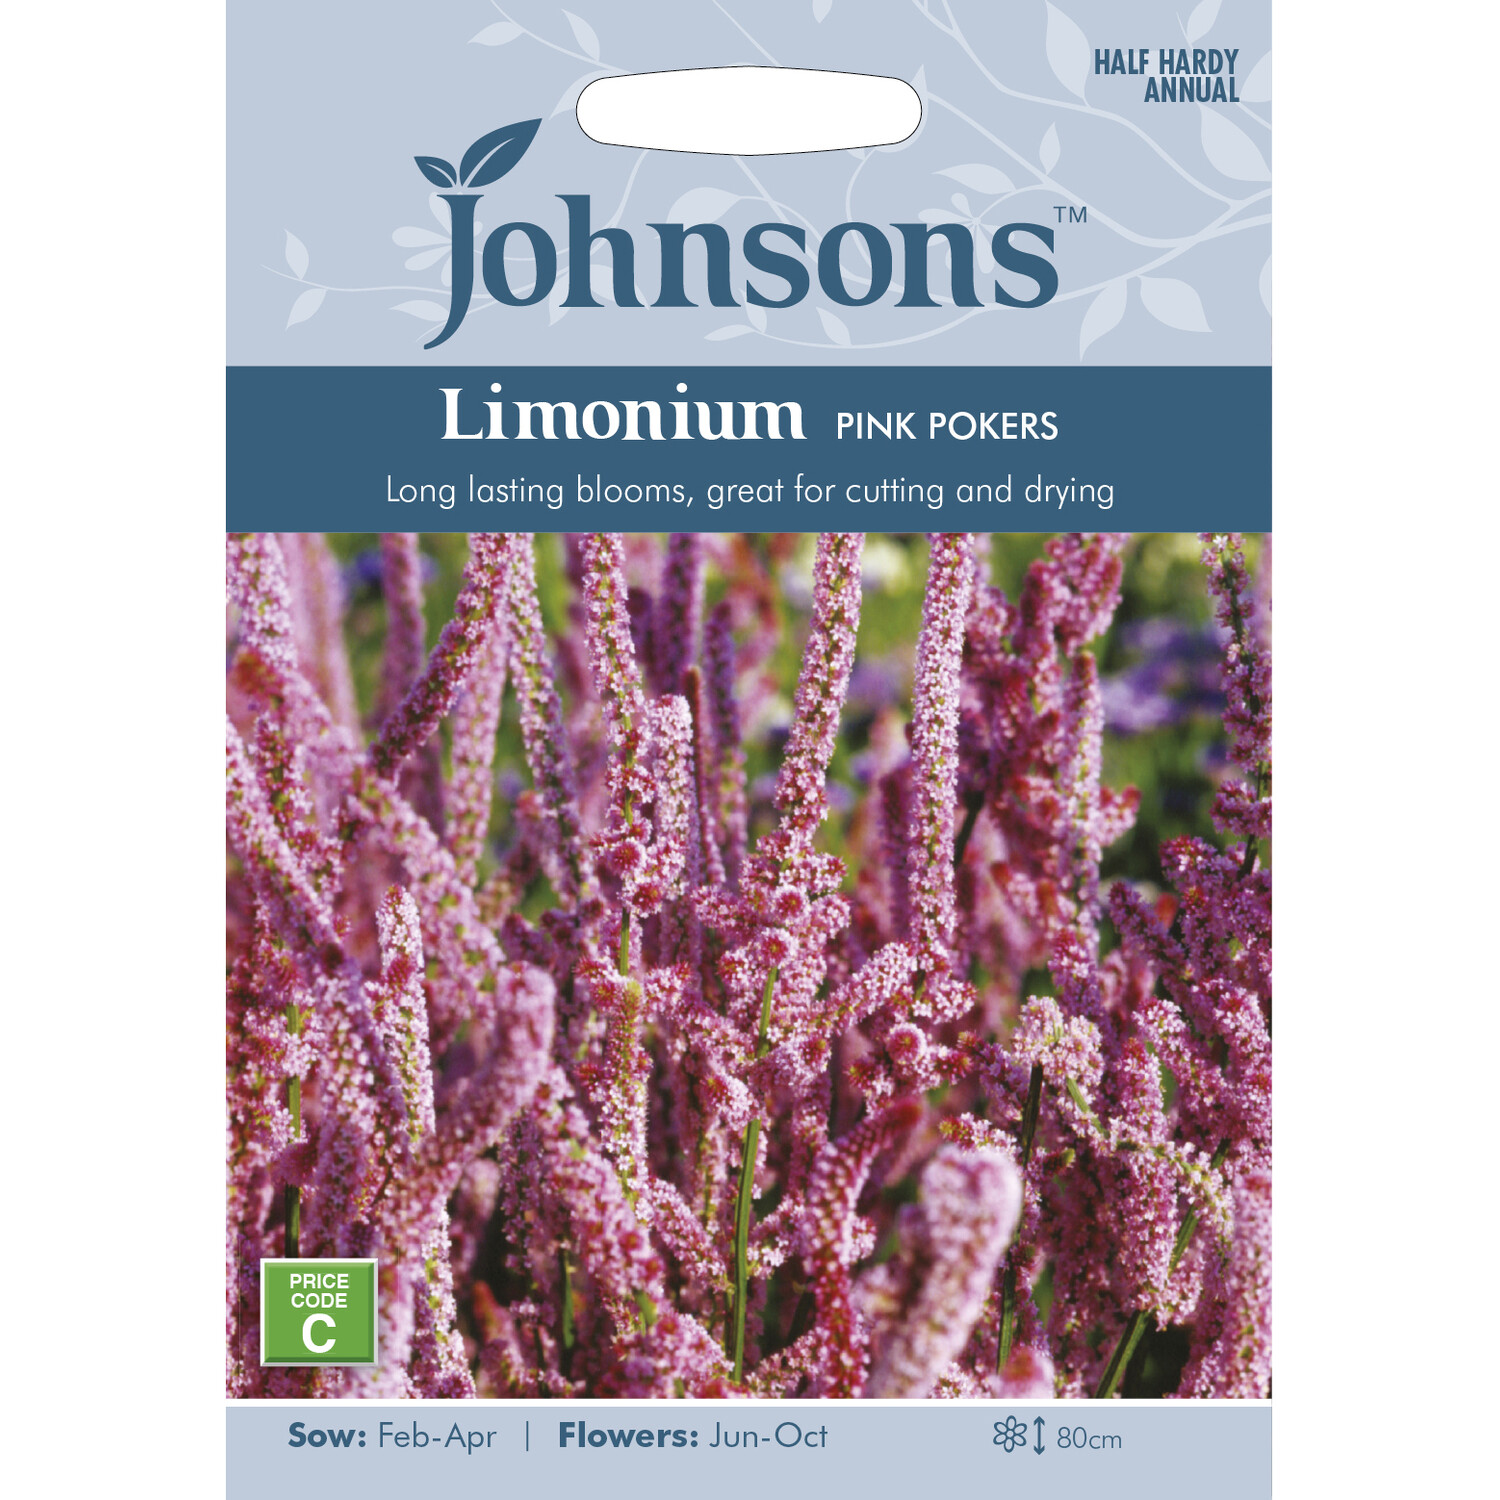 Johnsons Limonium Pink Pokers Flower Seeds Image 2